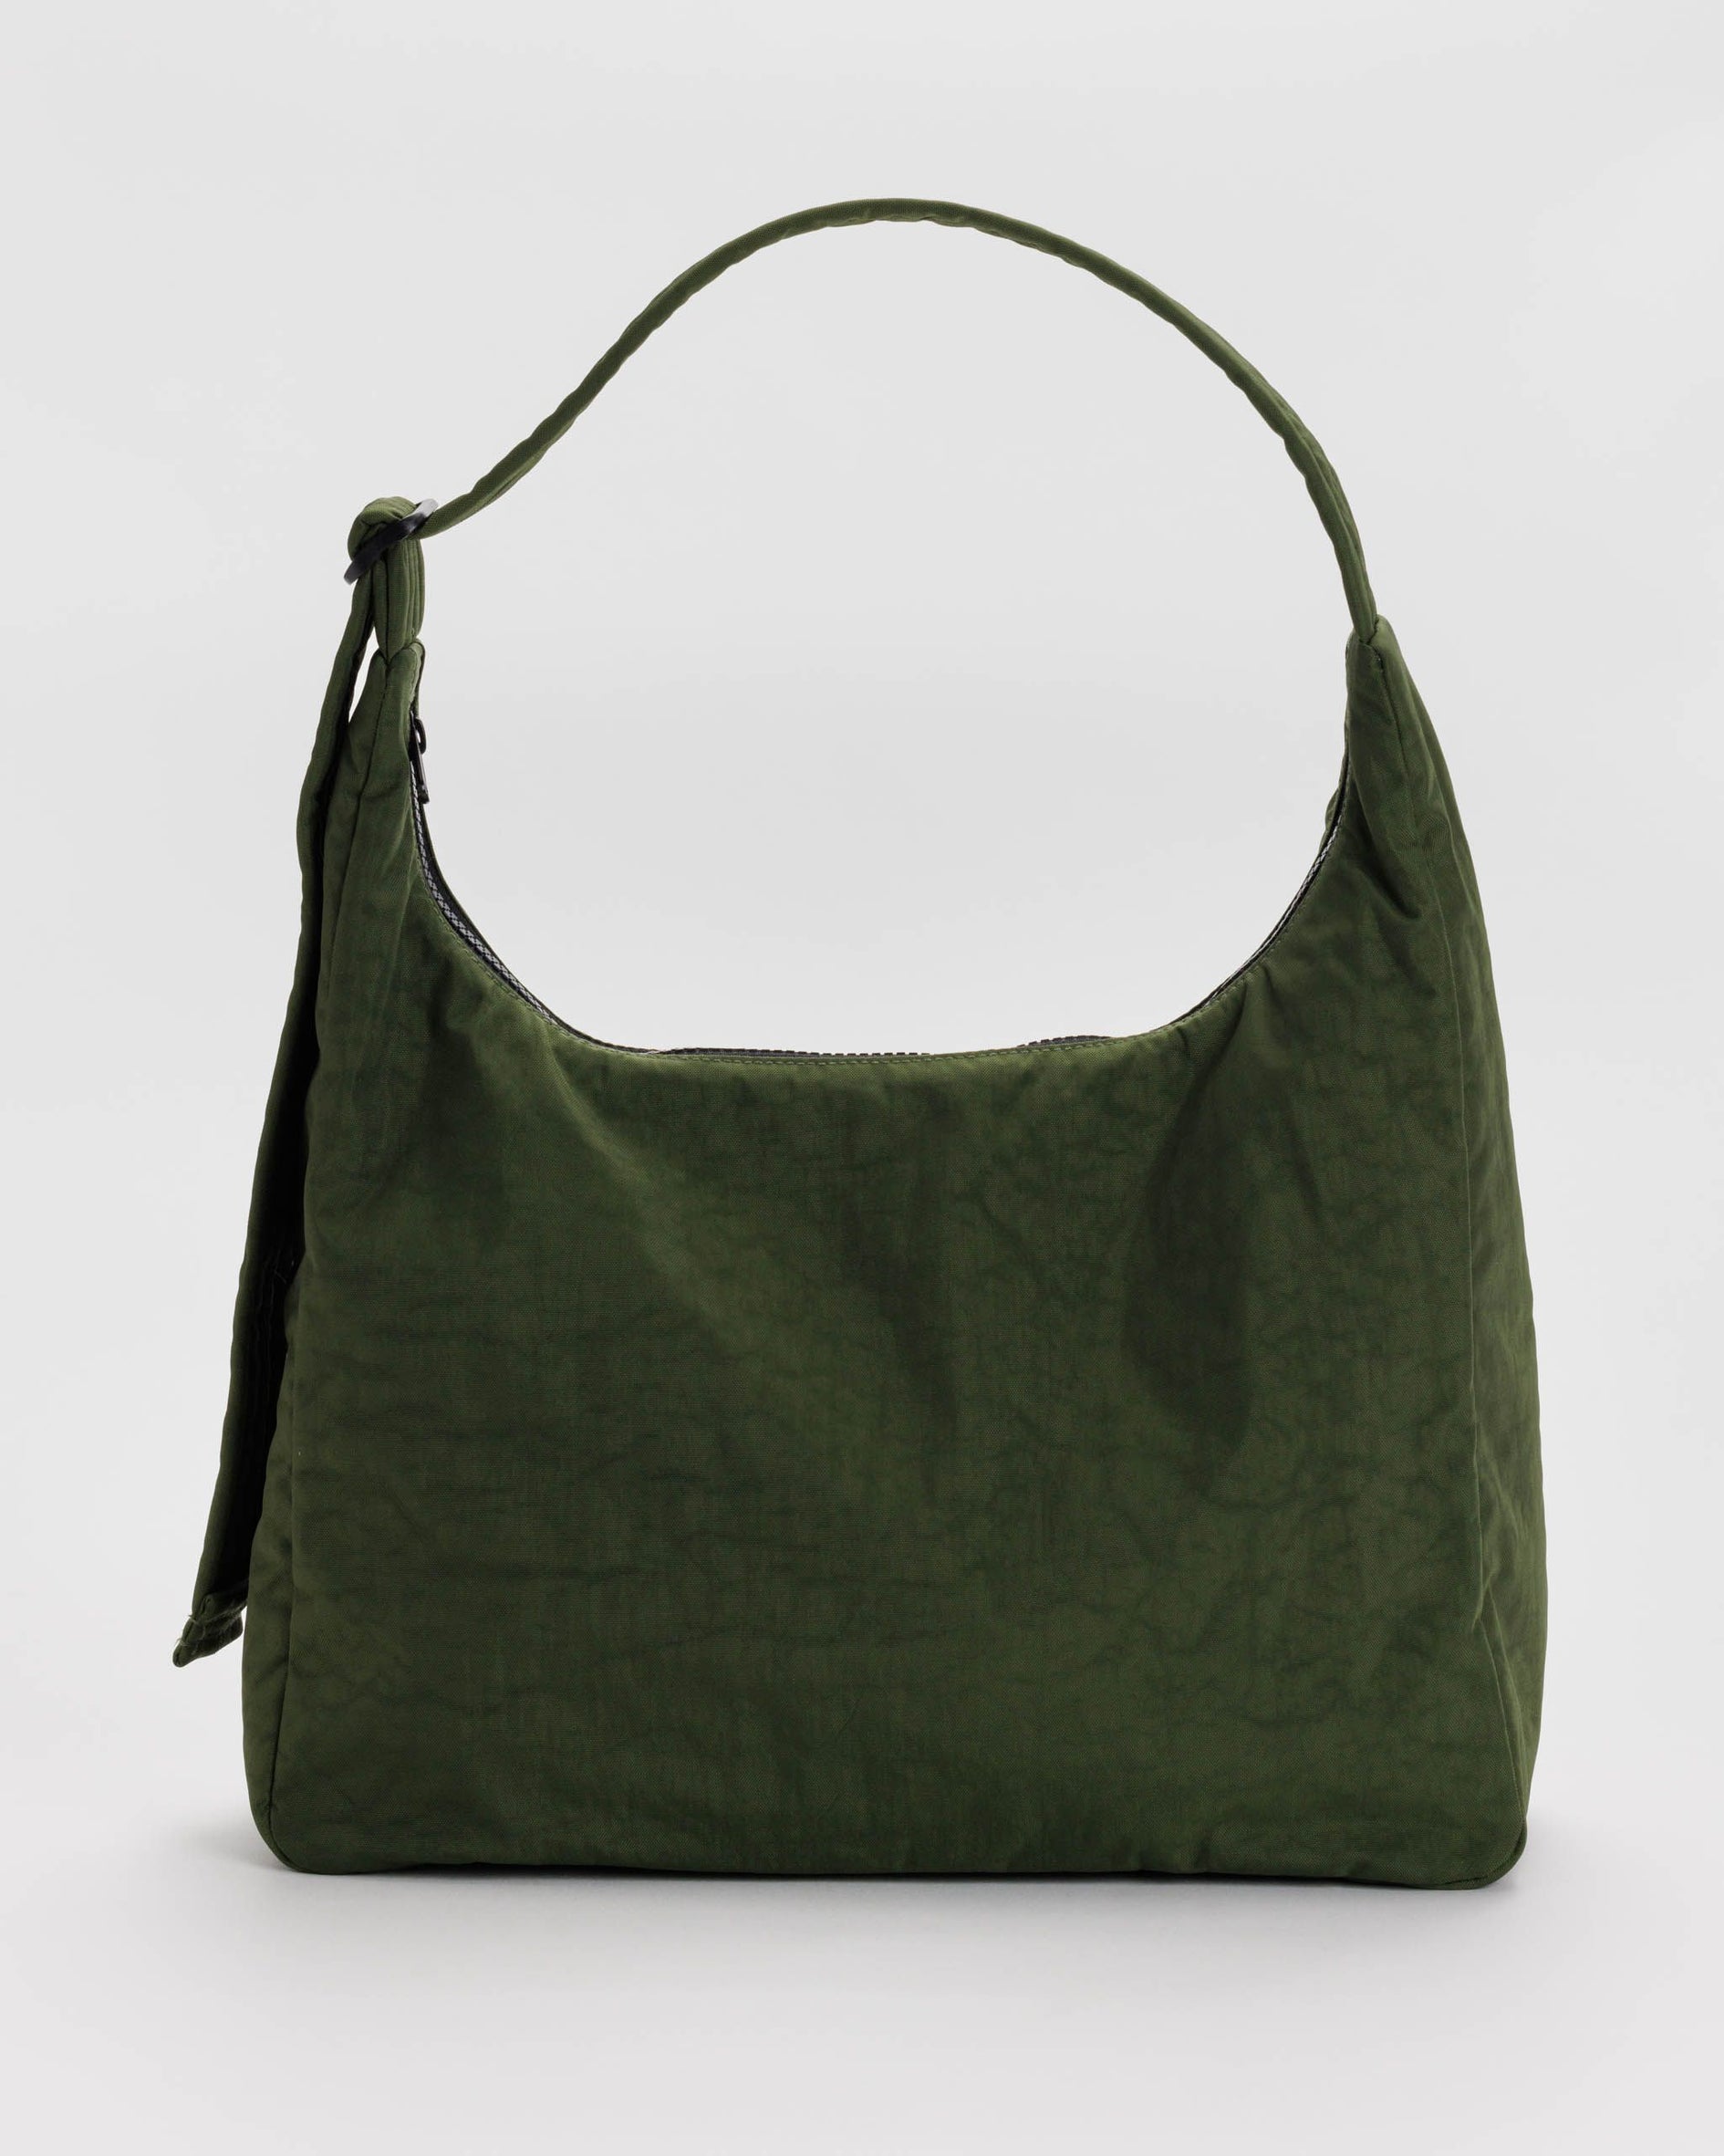 Women's Handbags & Purses for sale in Arcadia | Facebook Marketplace |  Facebook